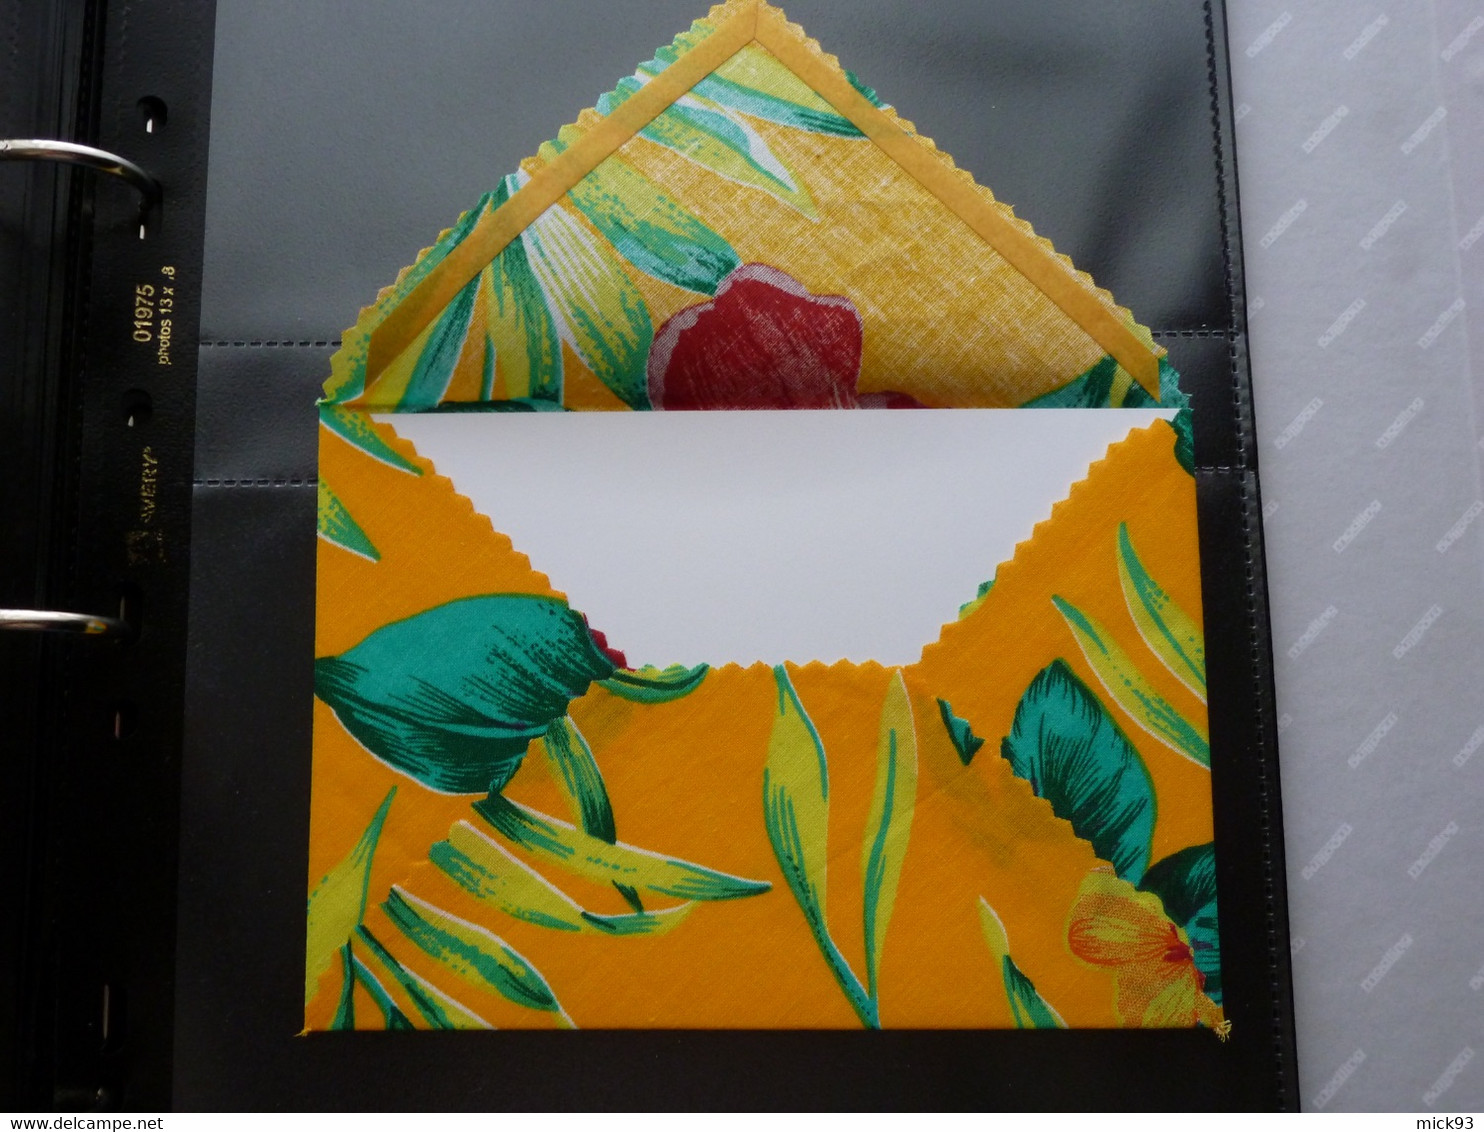 Polynésie  4 enveloppes en tissu tahitien (salon 2008 )